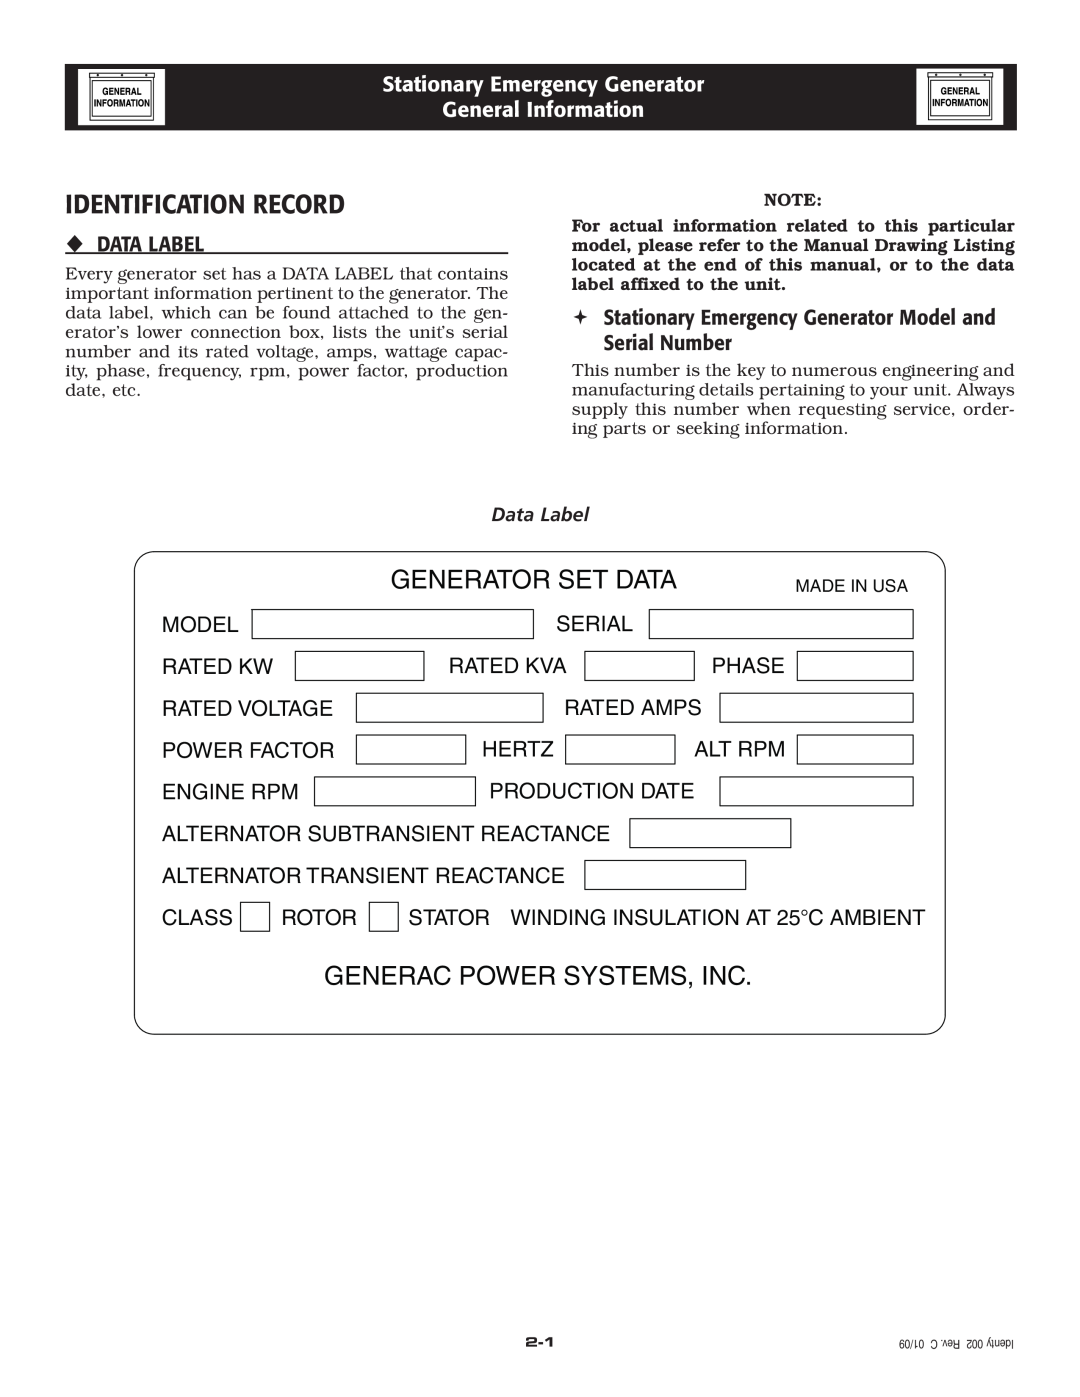 Grandstream Networks 005261-0 owner manual Identification Record, General Information, ‹Data Label, Generator Set Data 